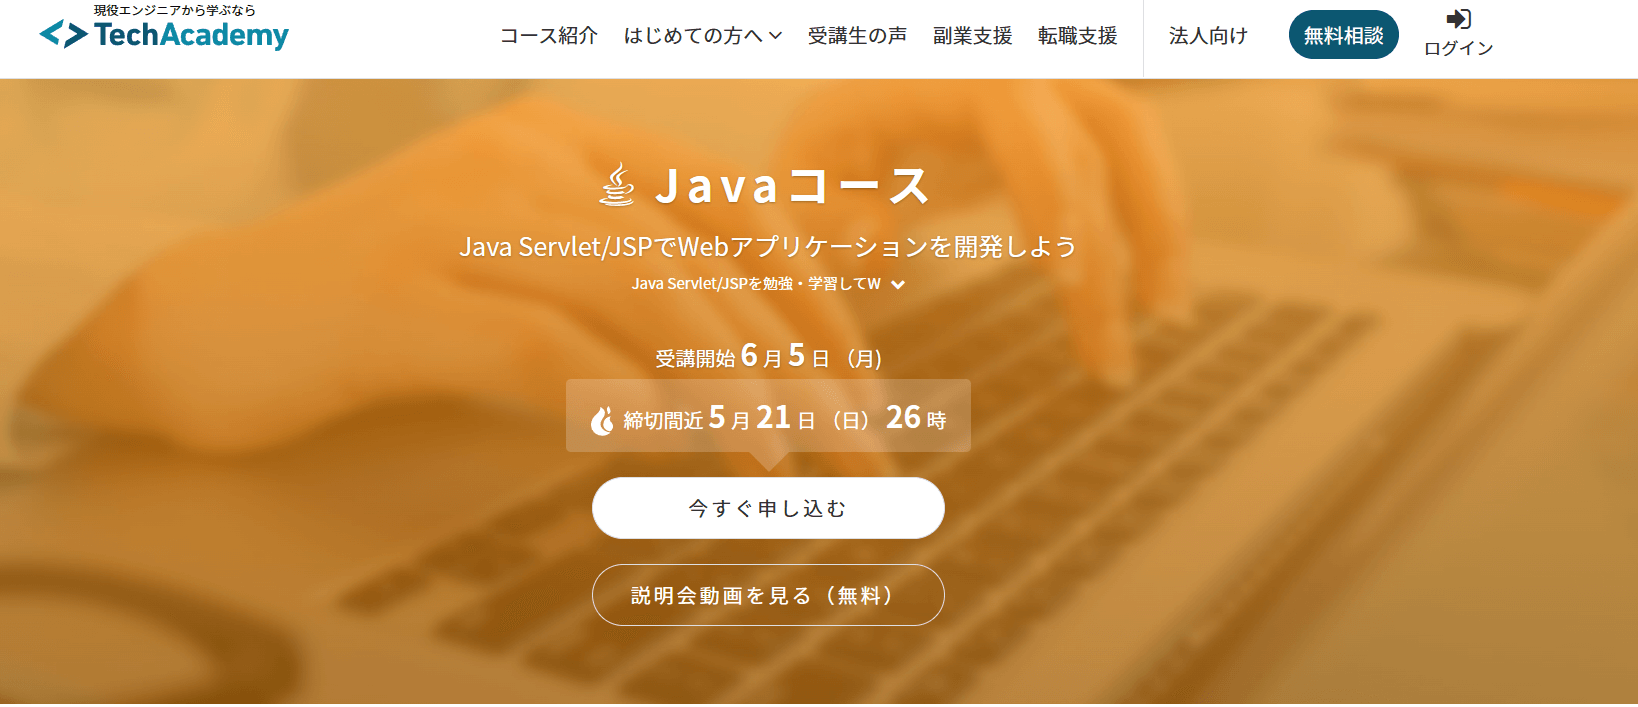 Techacademy「Javaコース」